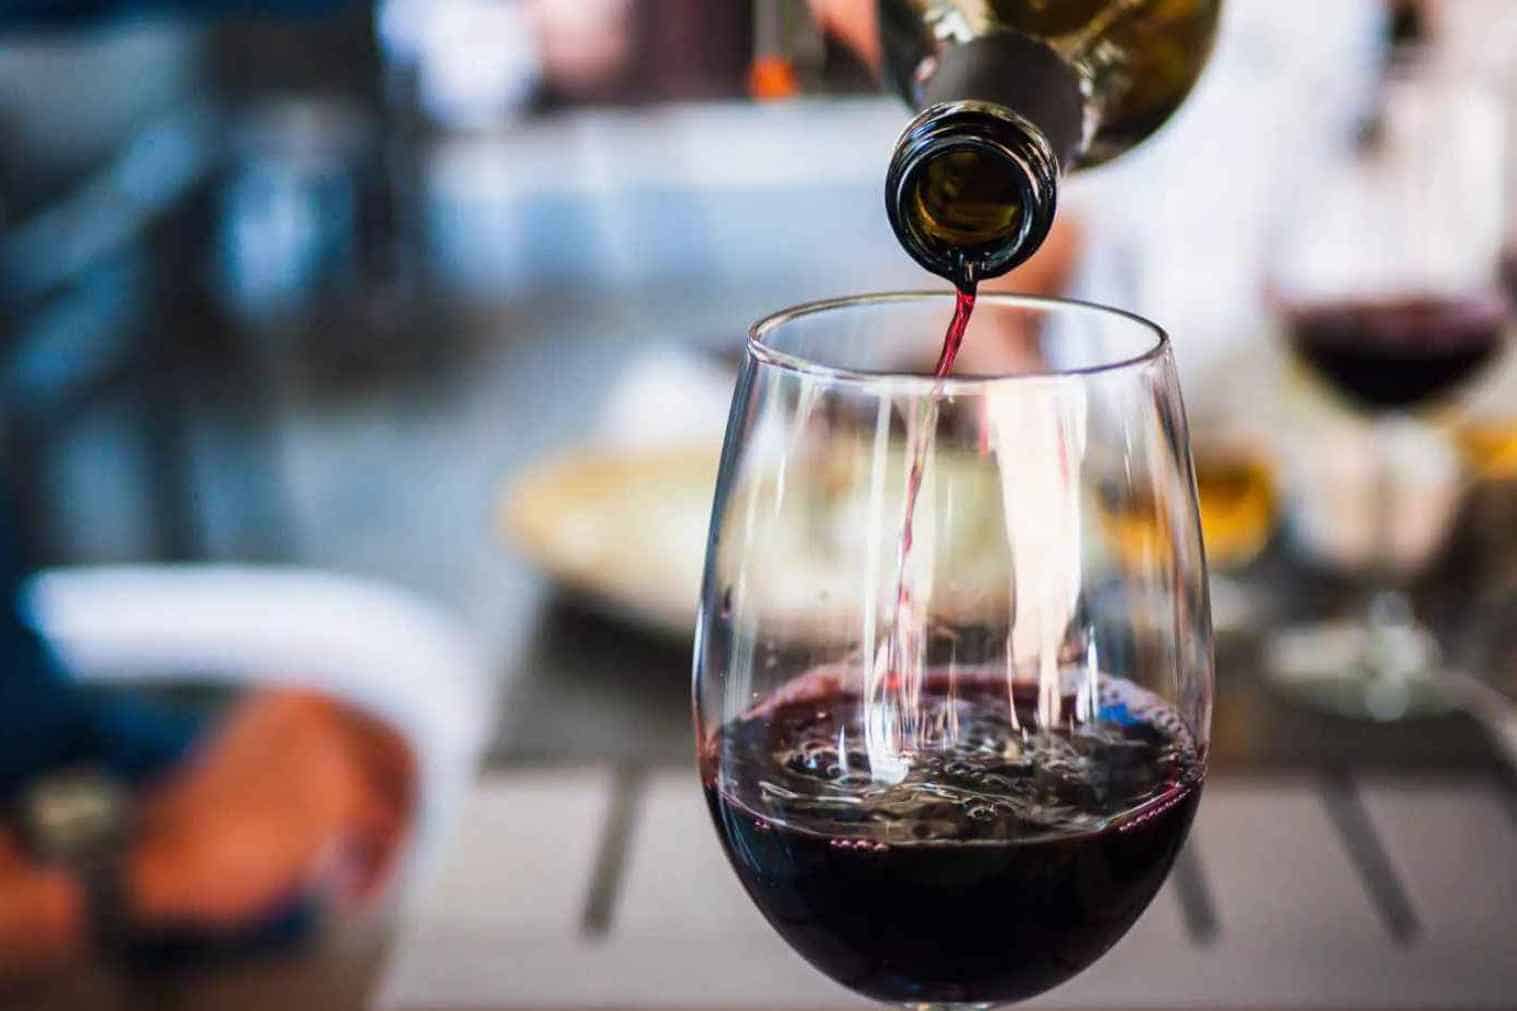 The Myth Behind Sulfites as Culprit for Wine Headaches